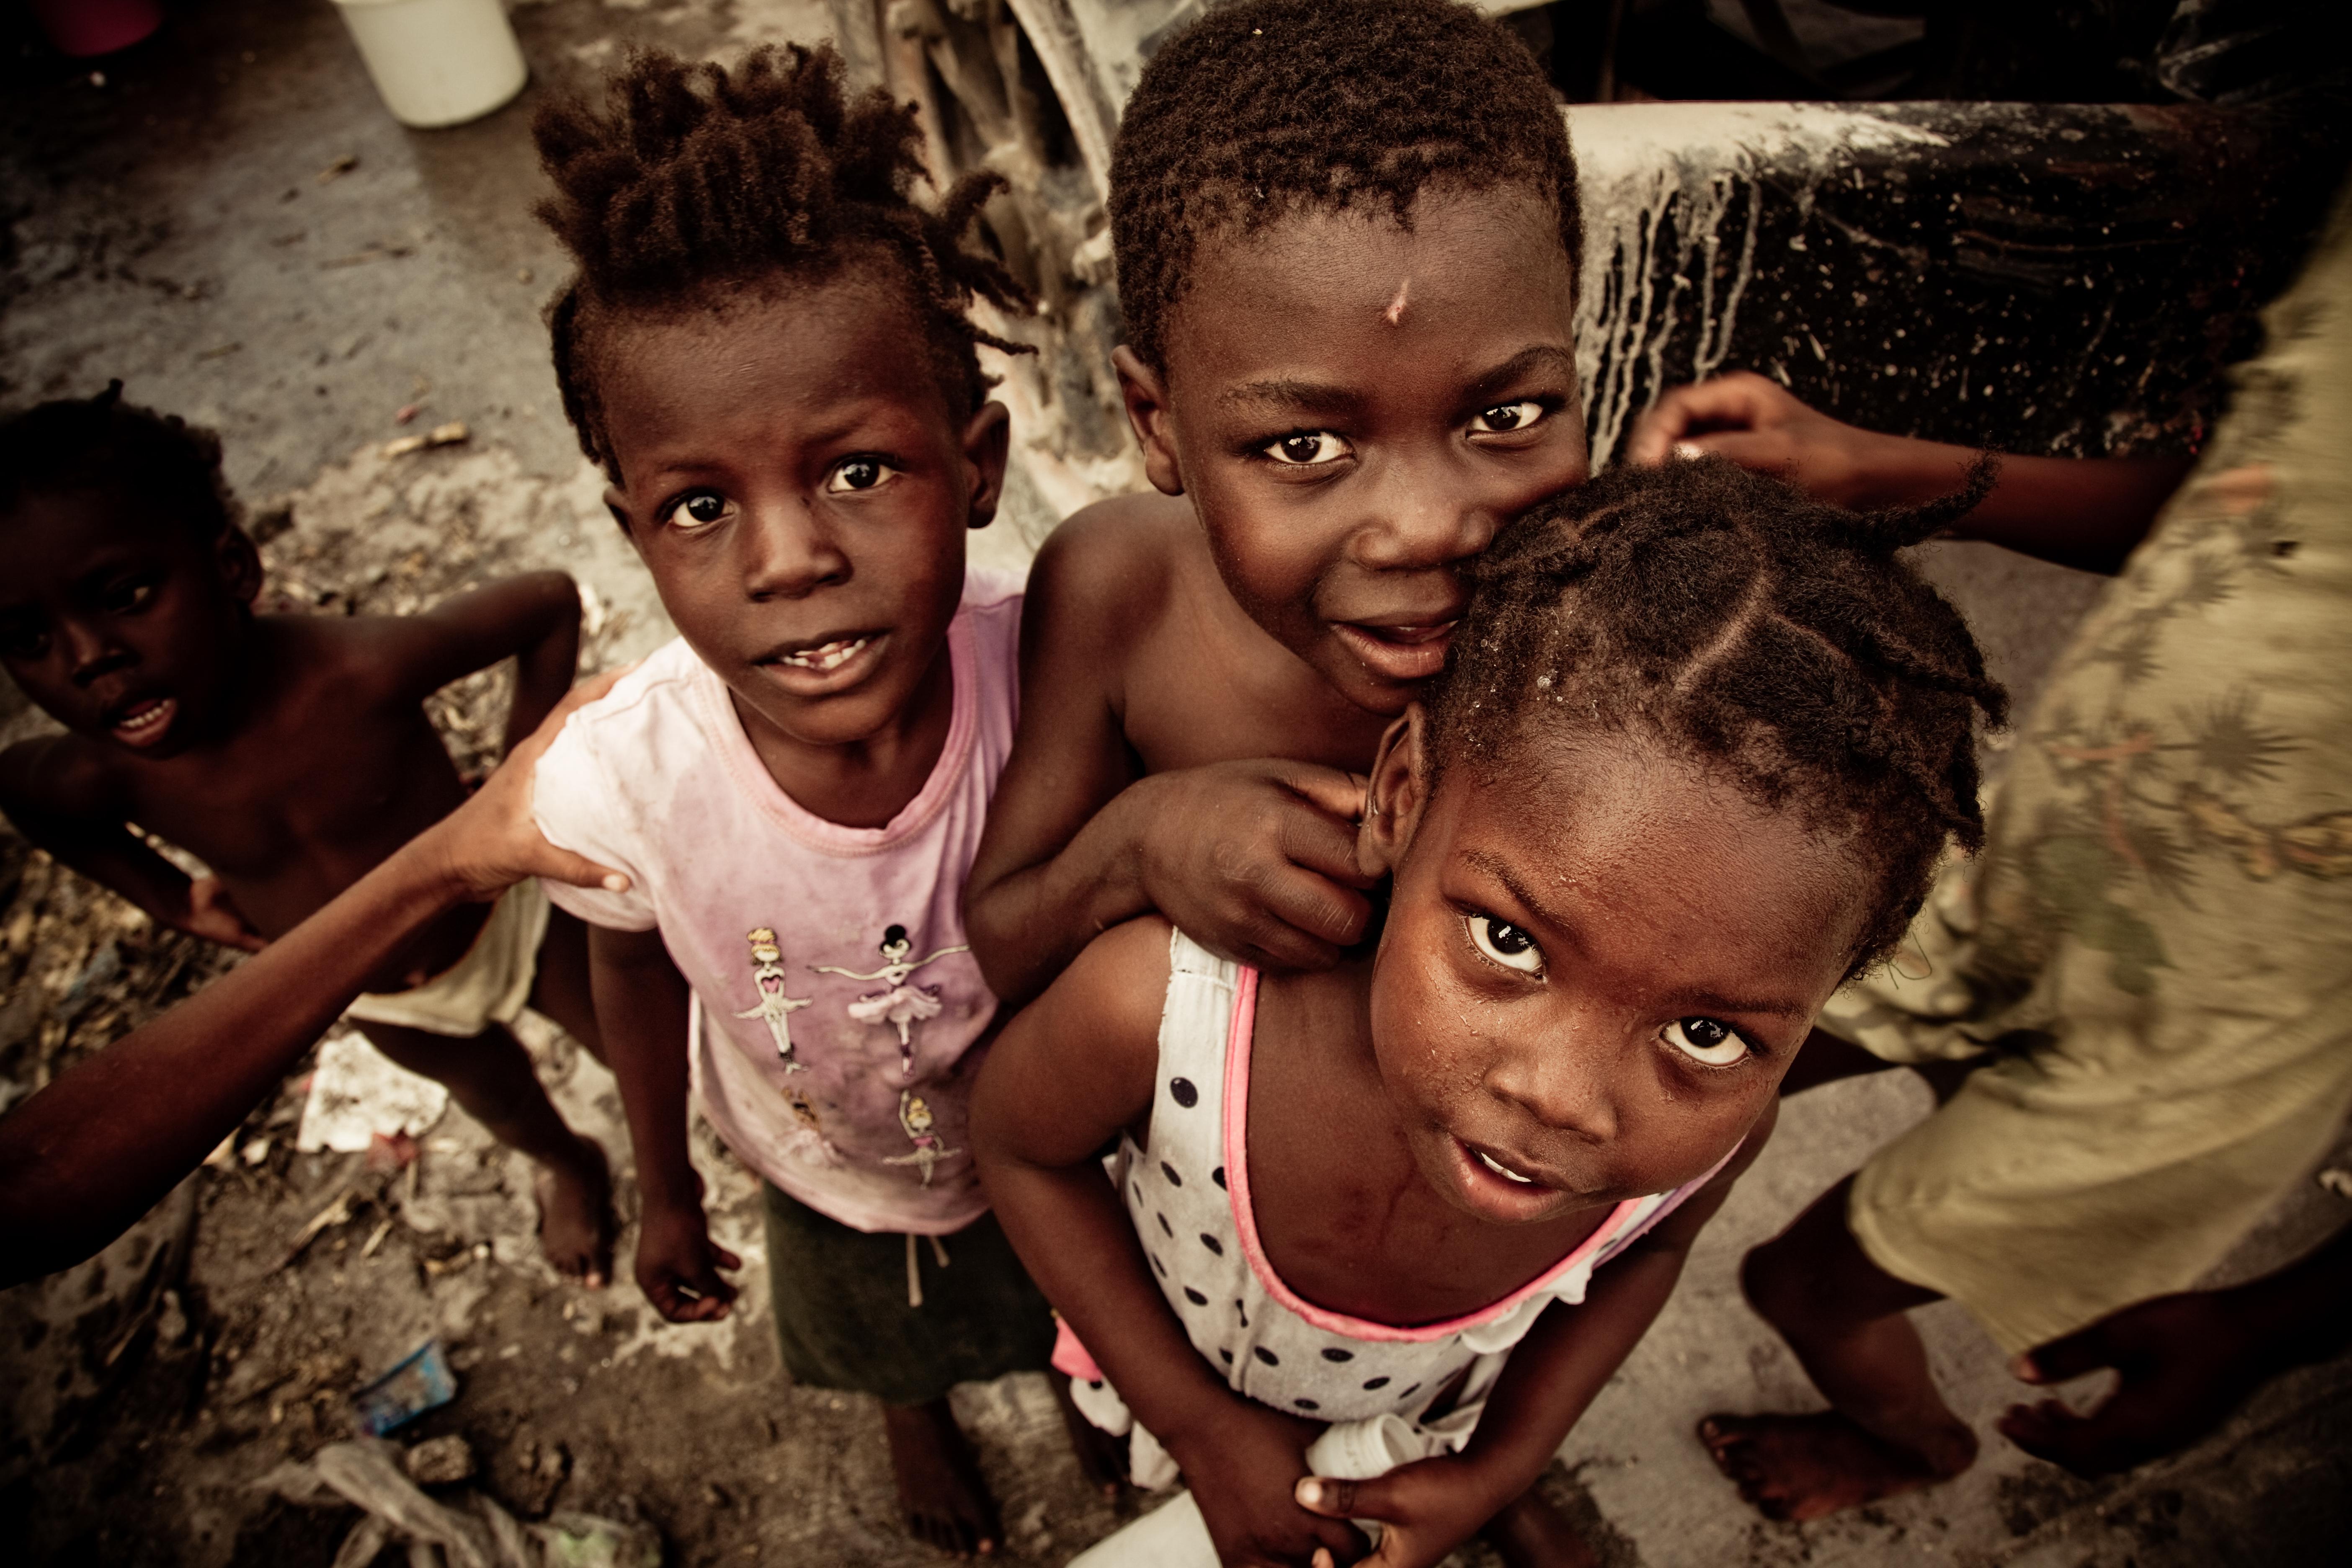 Tao Ruspoli Portrait Photograph - Haiti - Contemporary, Color, Photography, 21st Century, Portrait